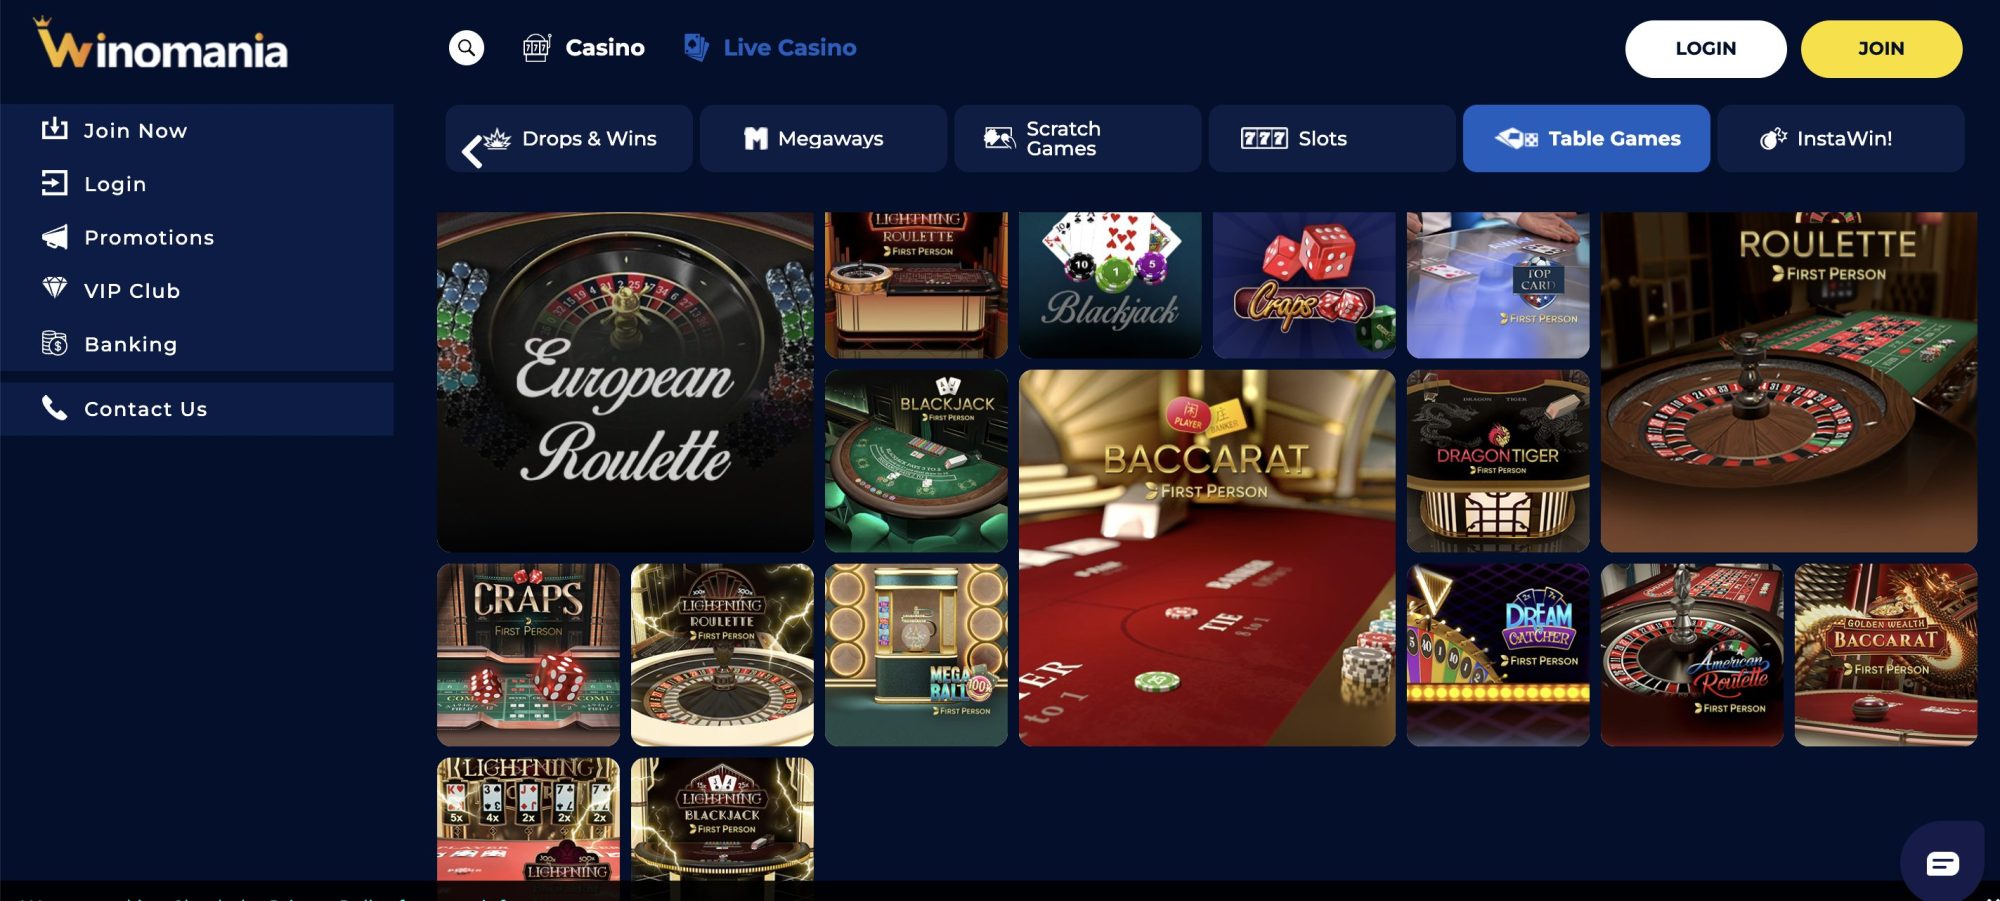 WinOMania casino review 